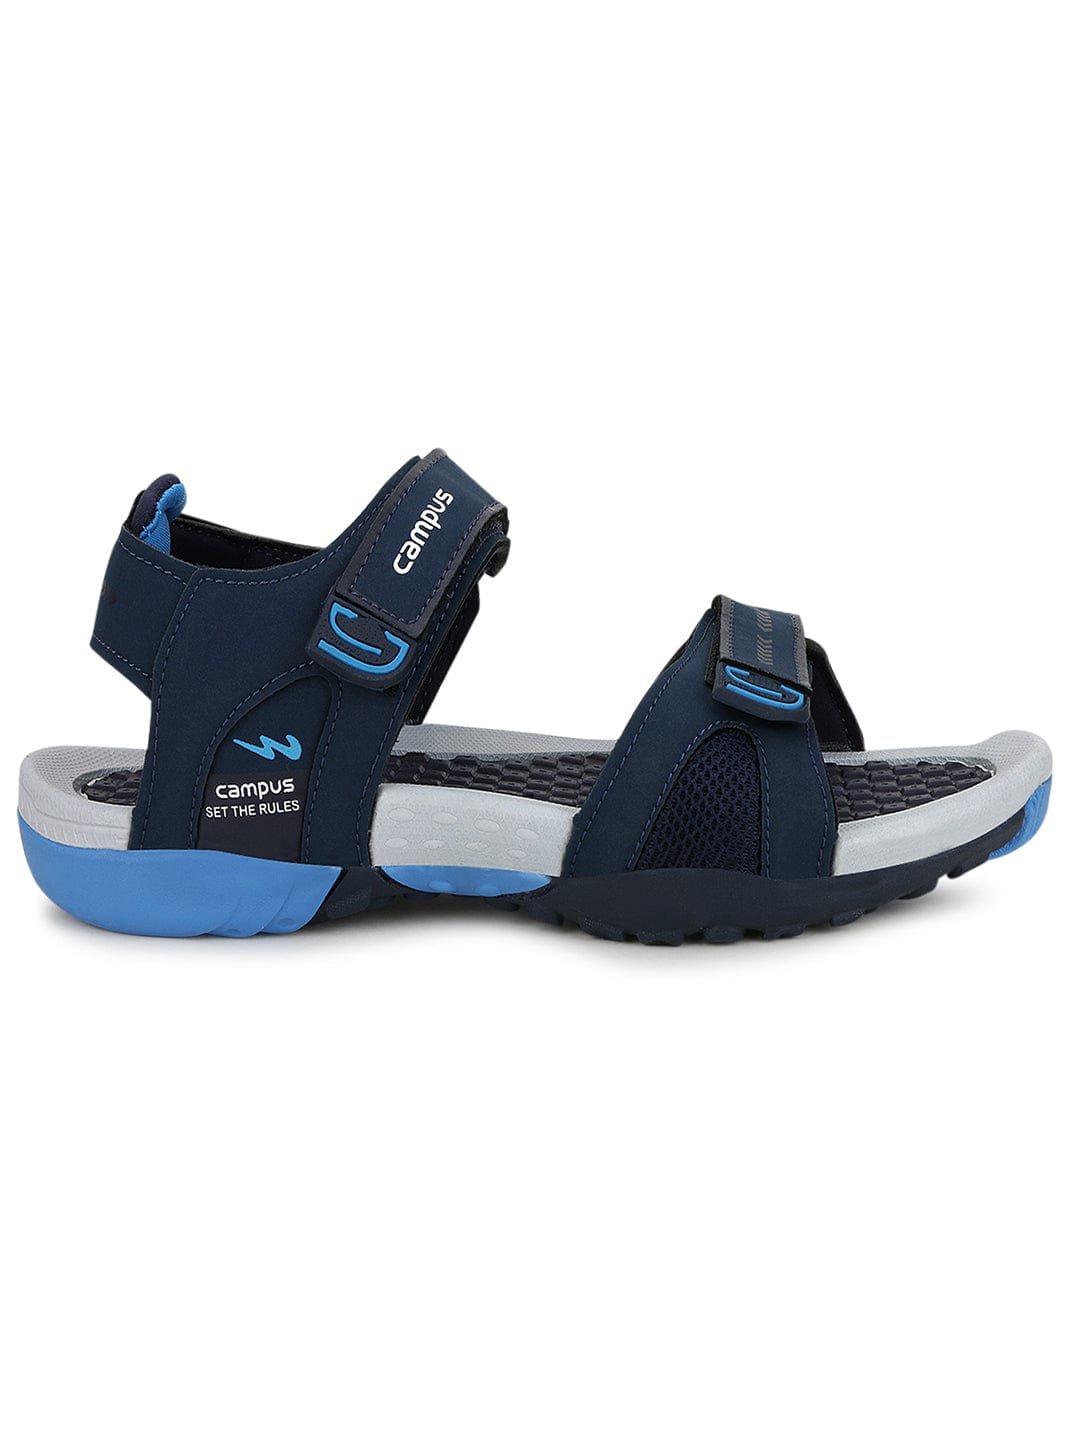 Buy 2GC-18 Men's Outdoor Sandal online | Campus Shoes